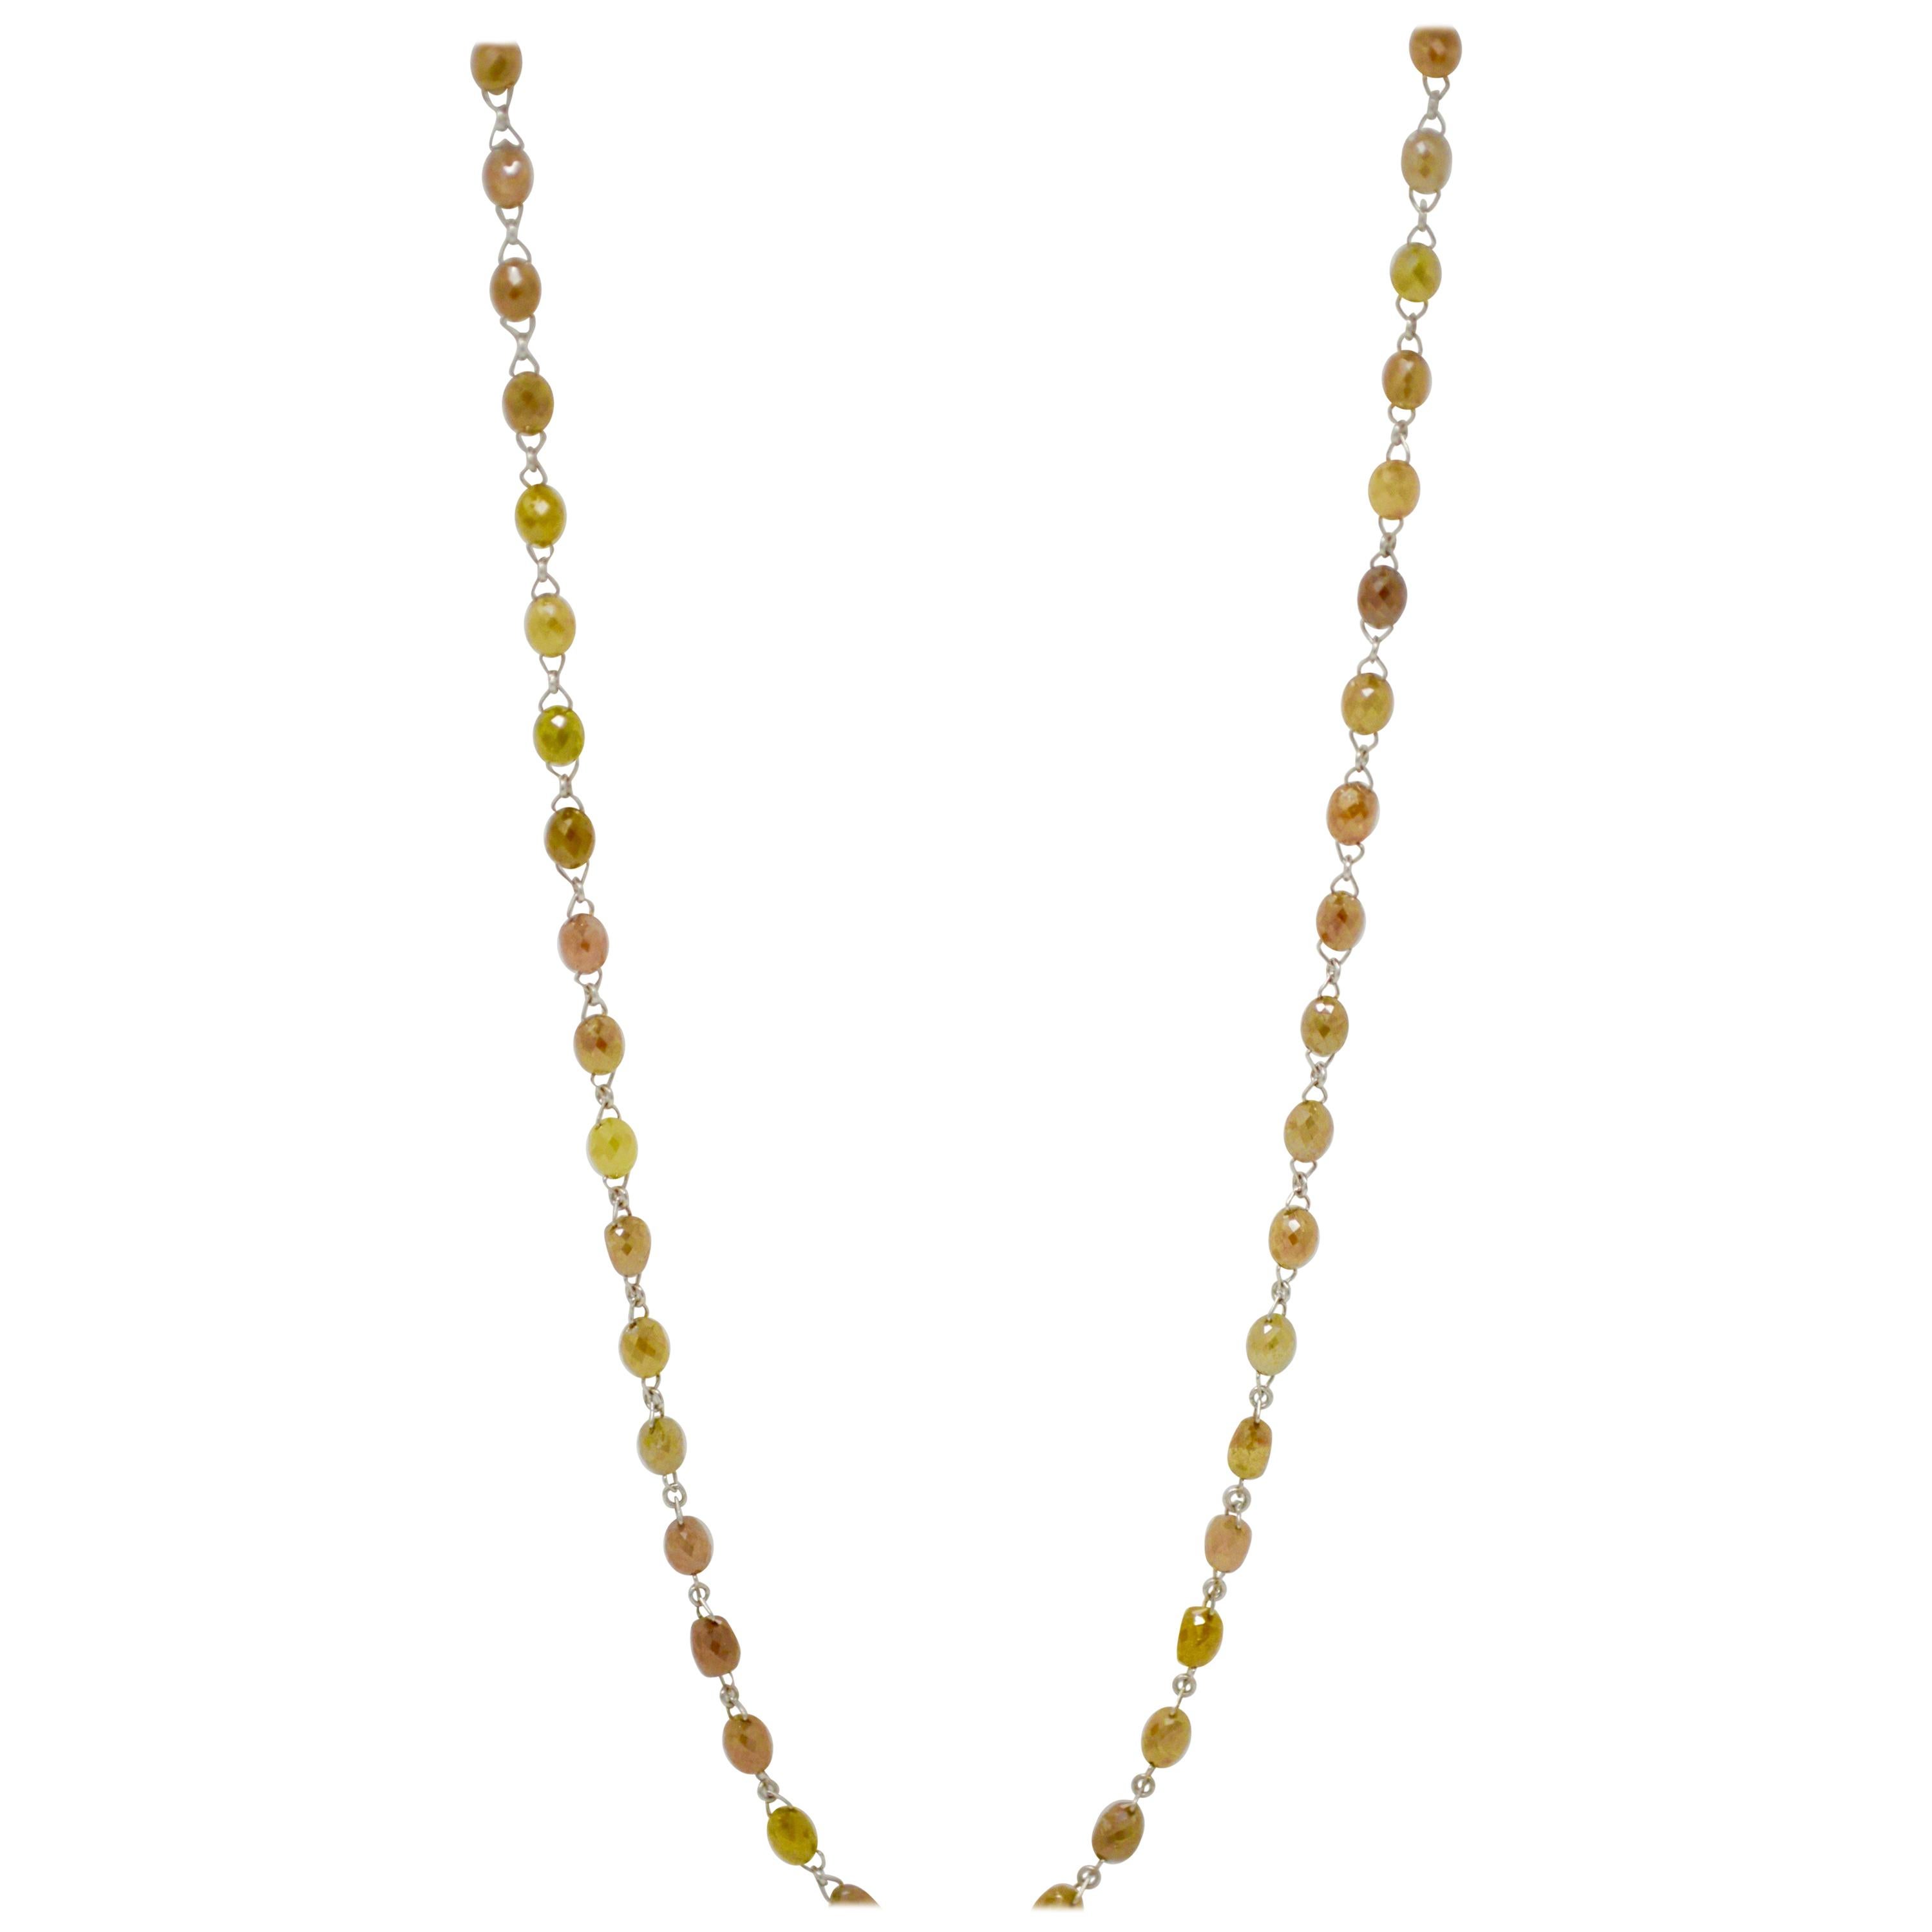 40 Carat Natural Fancy Multicolored Diamond Bead Necklace in 18 Karat